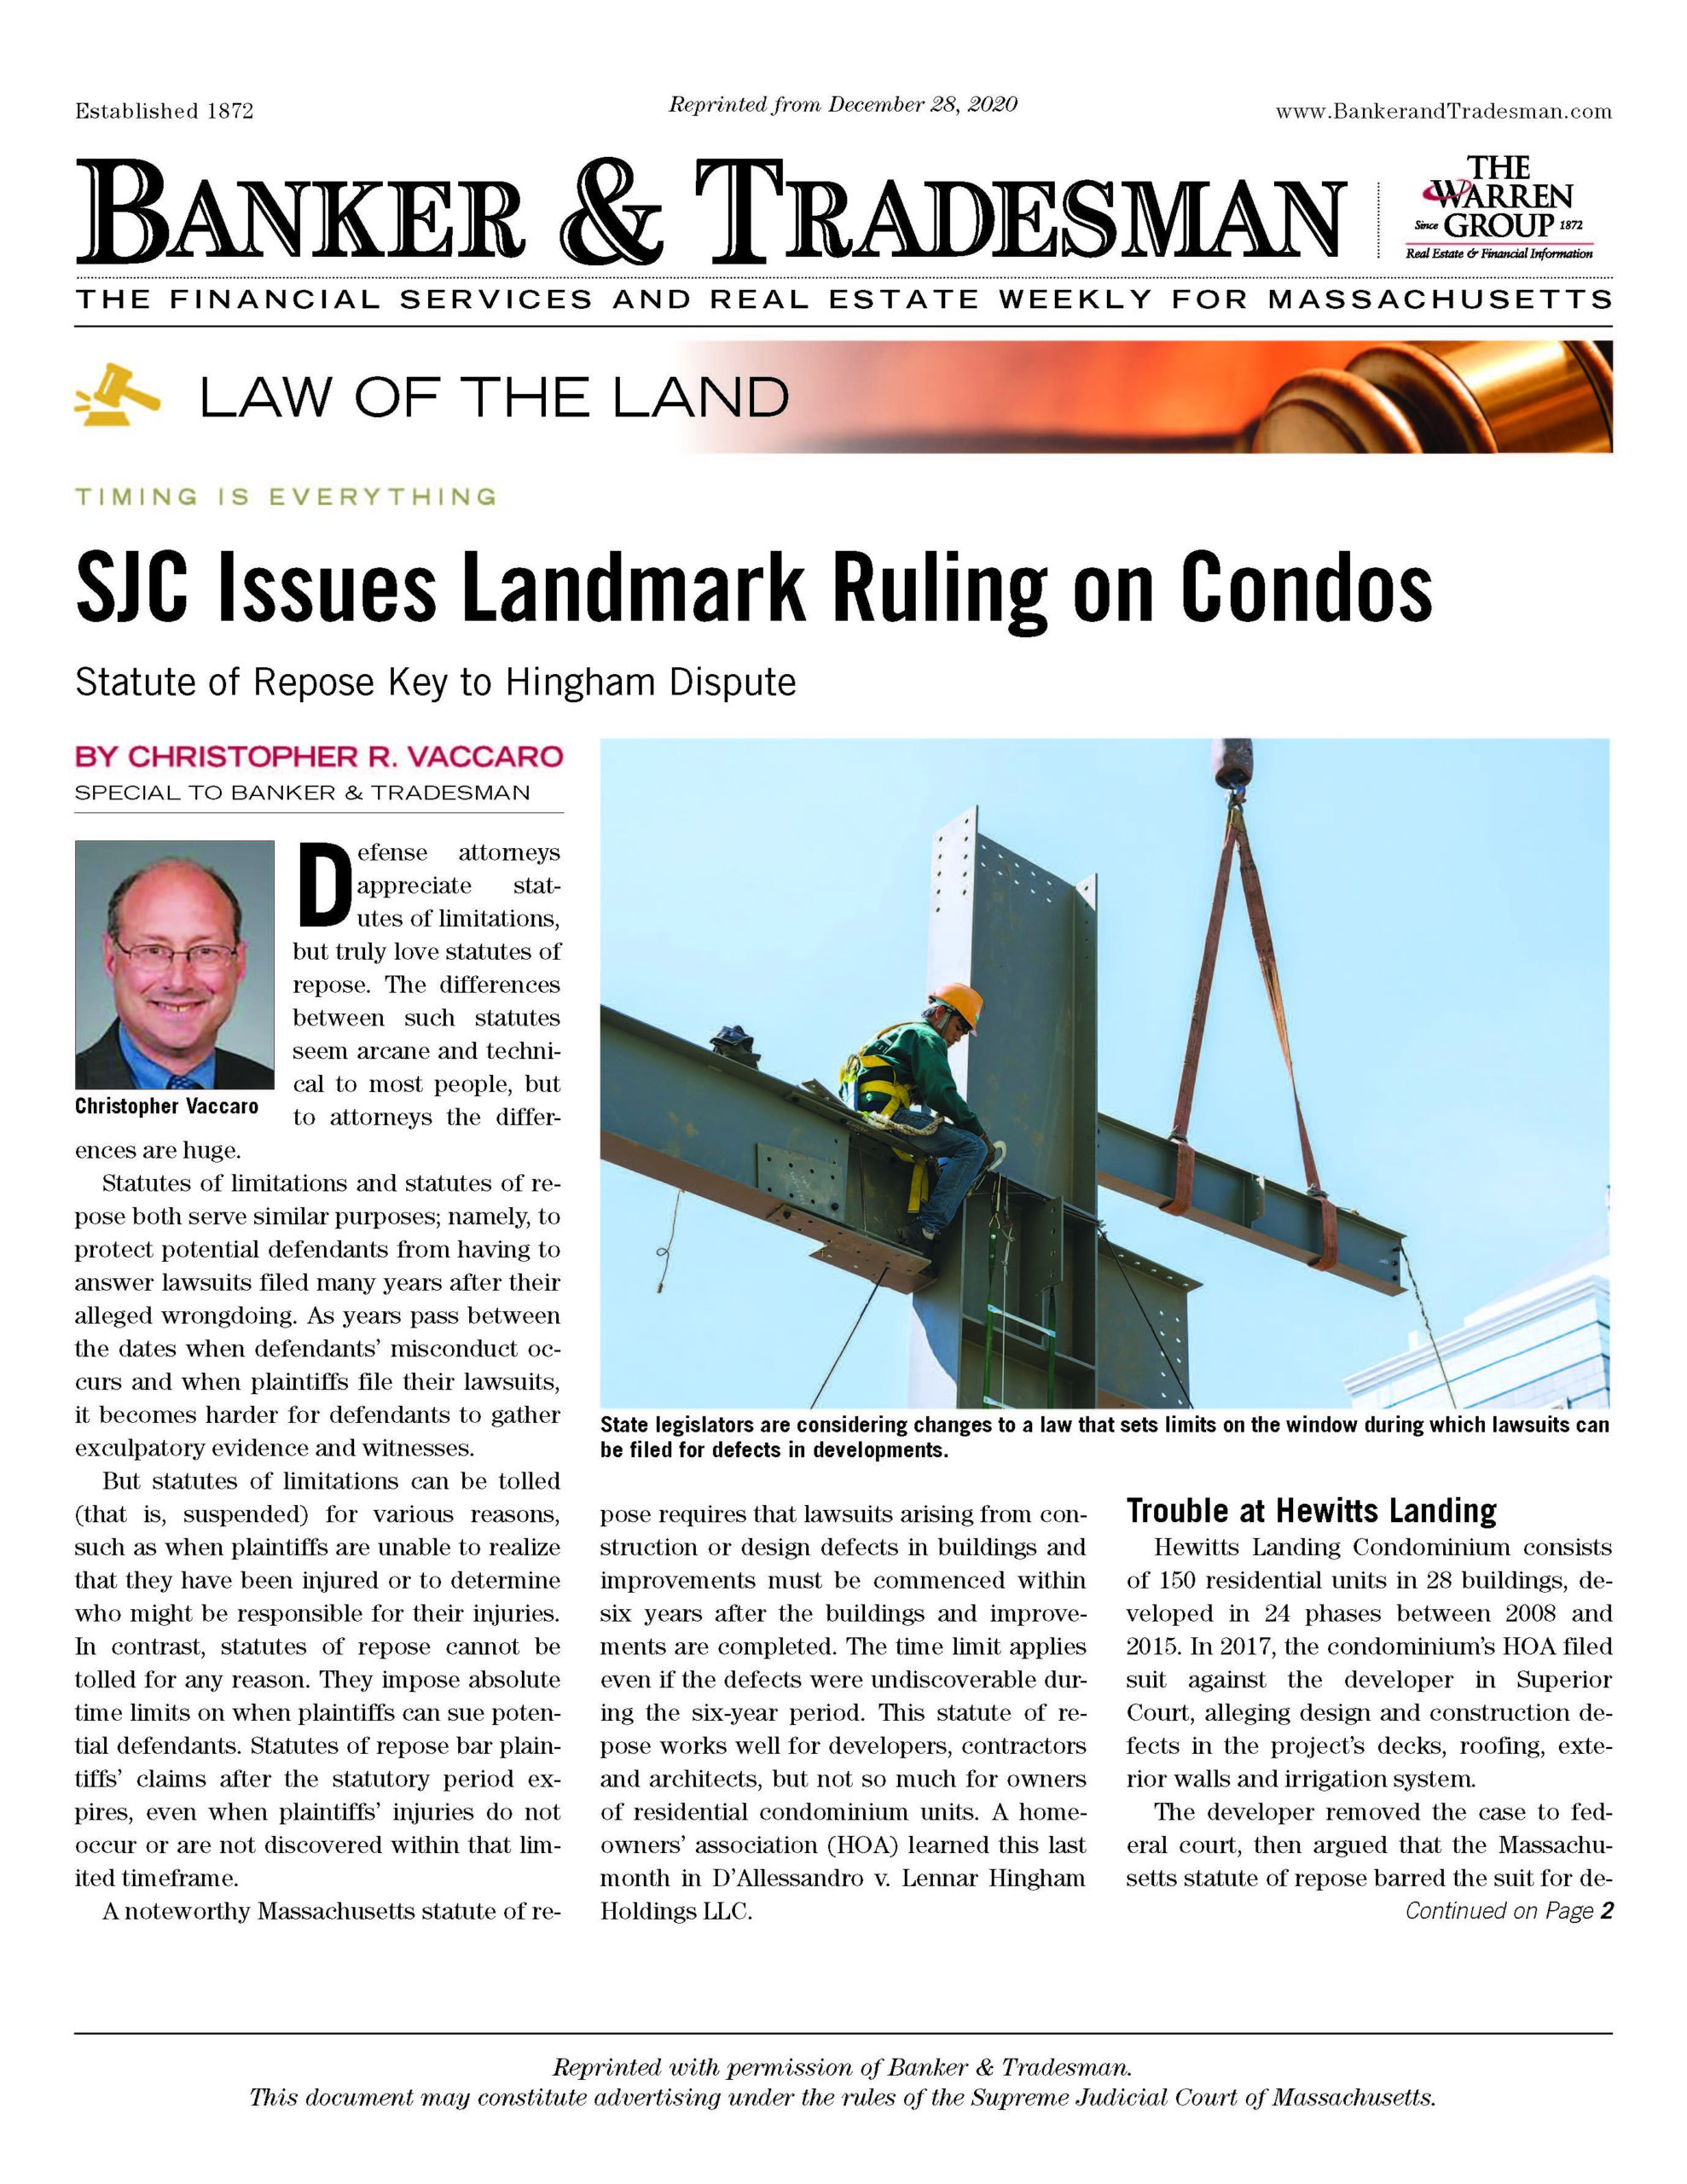 SJC Issues Landmark Ruling on Condos